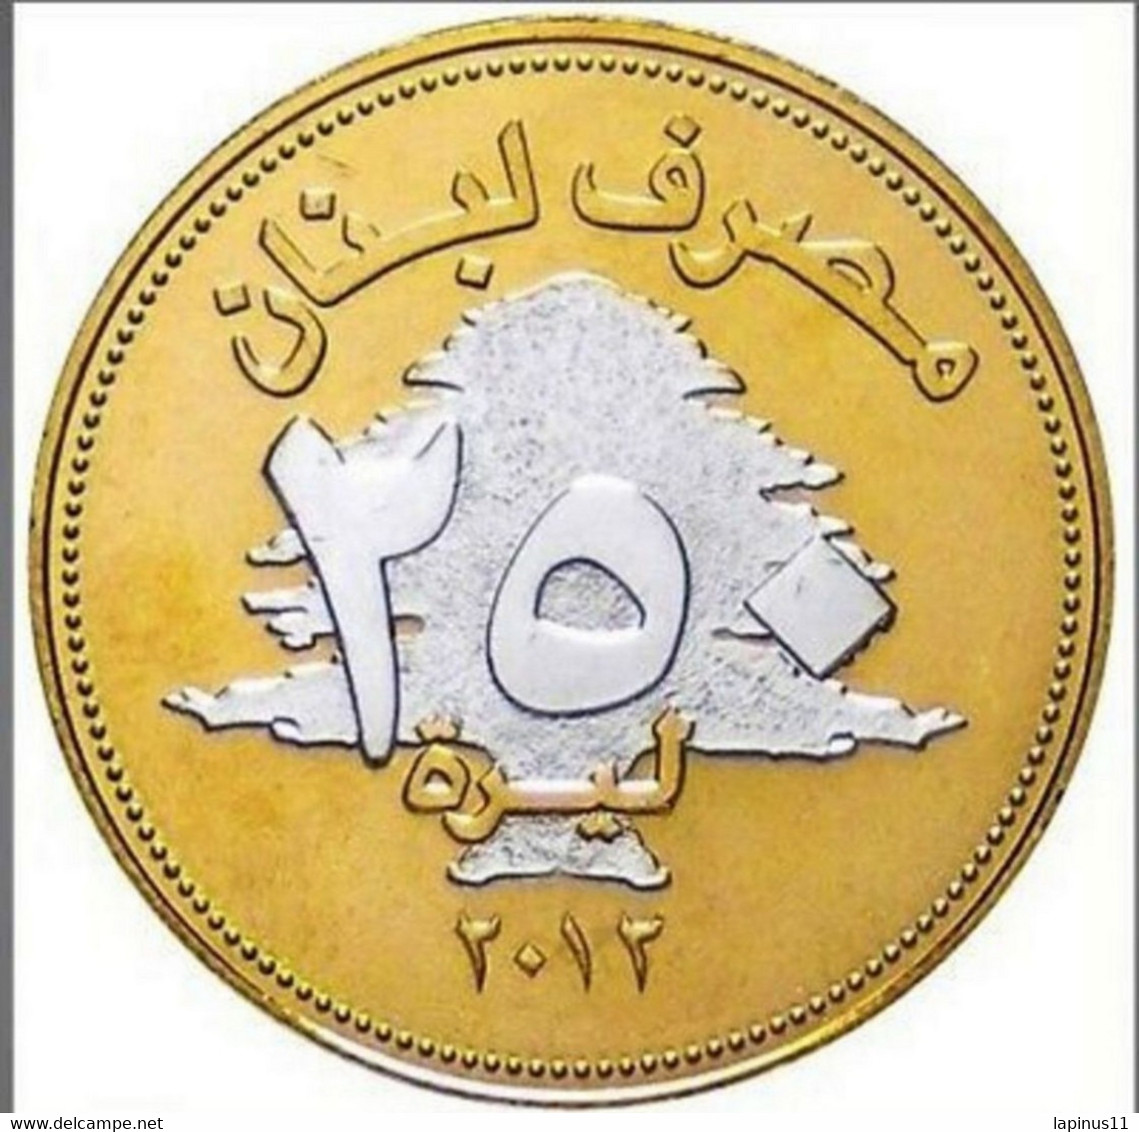 Lebanon Liban  LUCKY Coin, UNC, Commemorative, 250 Livres 2012, In Capsule - Lebanon